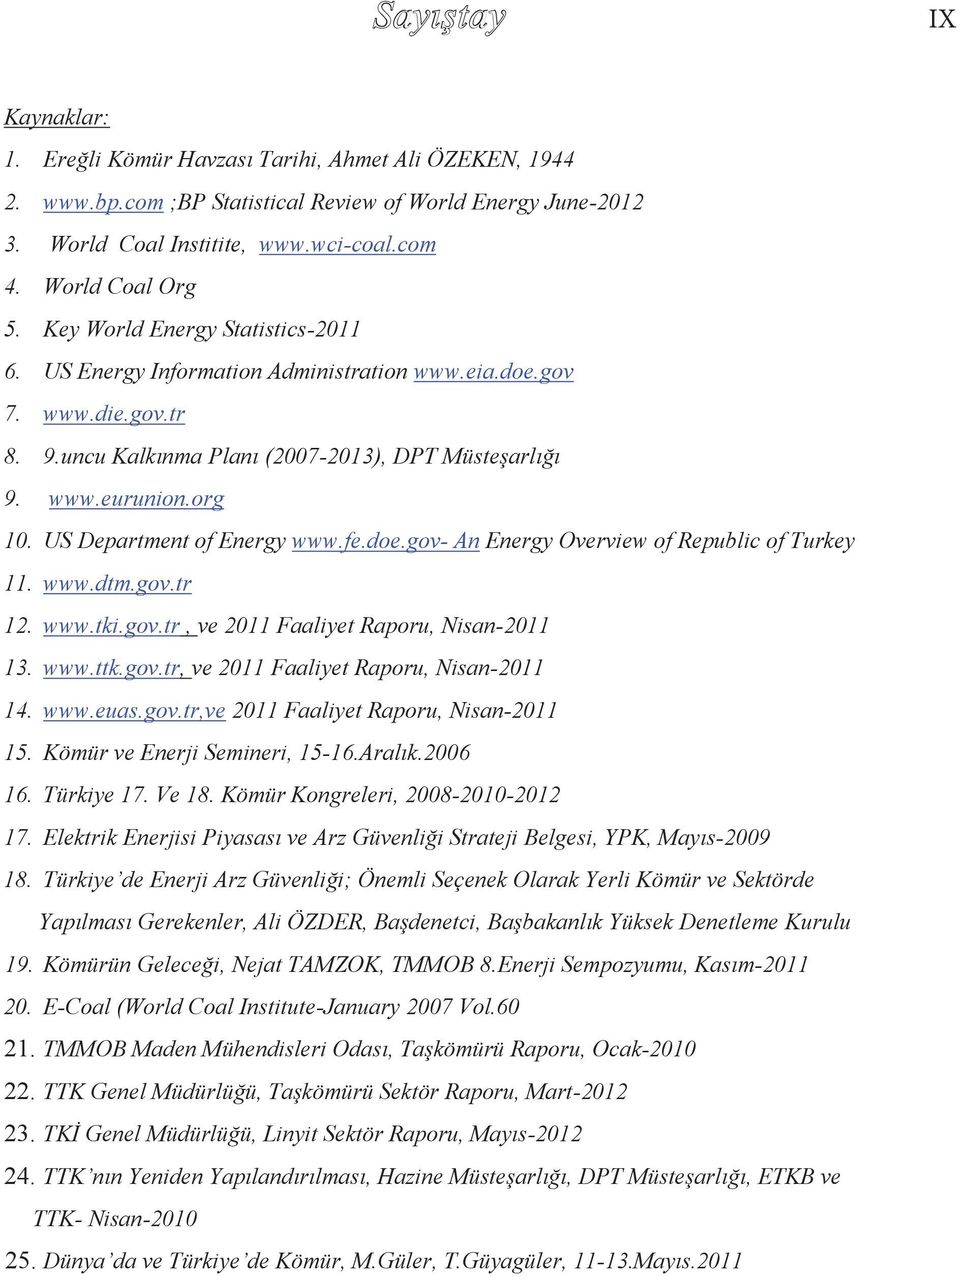 org 10. US Department of Energy www.fe.doe.gov- An Energy Overview of Republic of Turkey 11. www.dtm.gov.tr 12. www.tki.gov.tr, ve 2011 Faaliyet Raporu, Nisan-2011 13. www.ttk.gov.tr, ve 2011 Faaliyet Raporu, Nisan-2011 14.